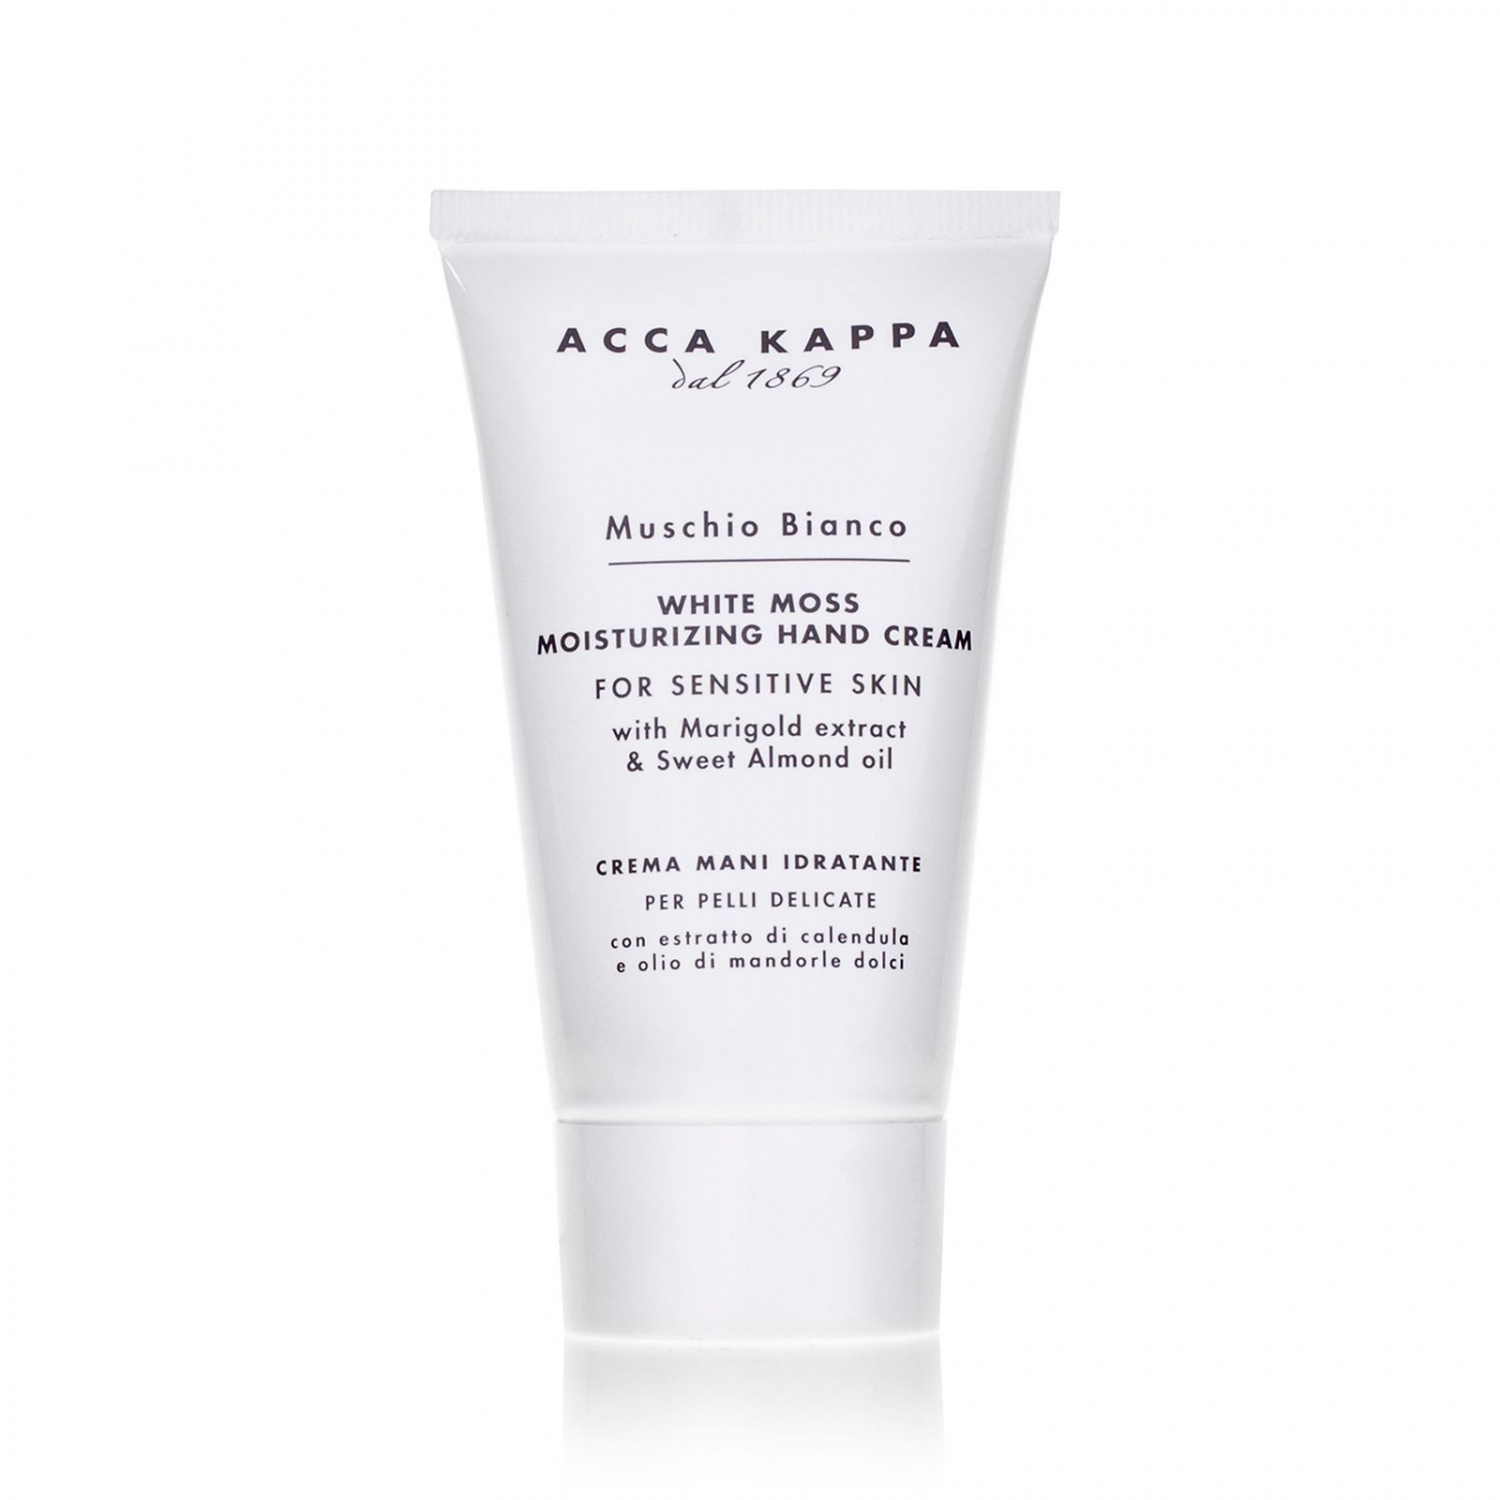 Acca Kappa Muschio Bianco Hand Cream 75ml - интернет-магазин профессиональной косметики Spadream, изображение 38867